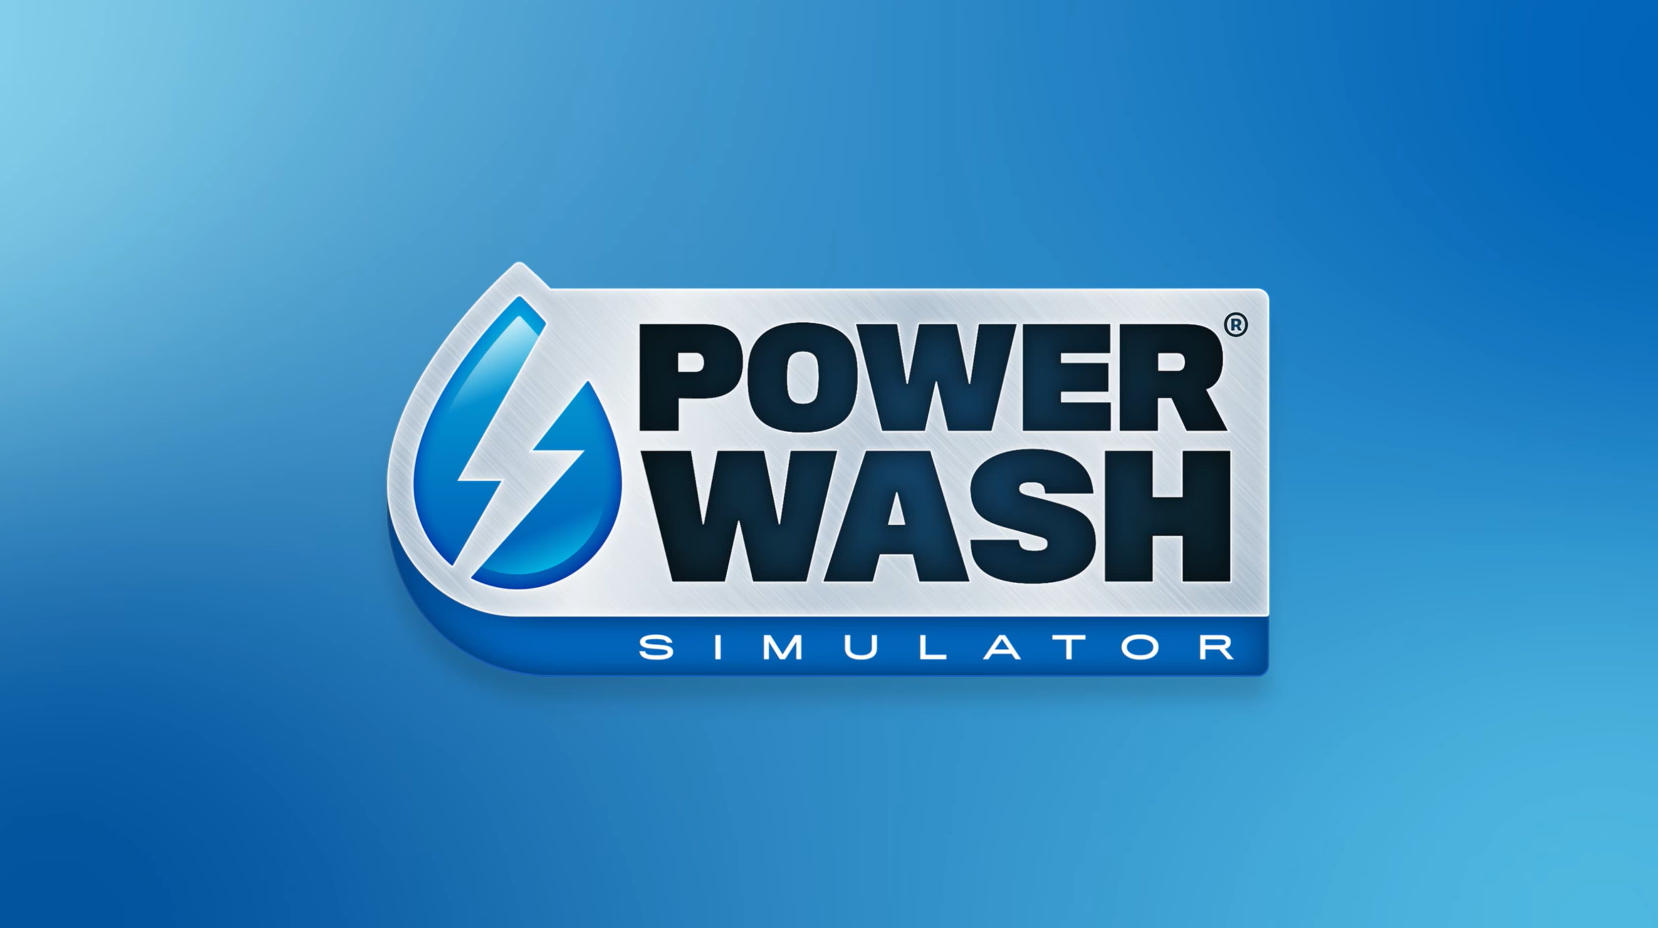 PowerWash Simulator Download for PC Free [Latest Version] - GMRF